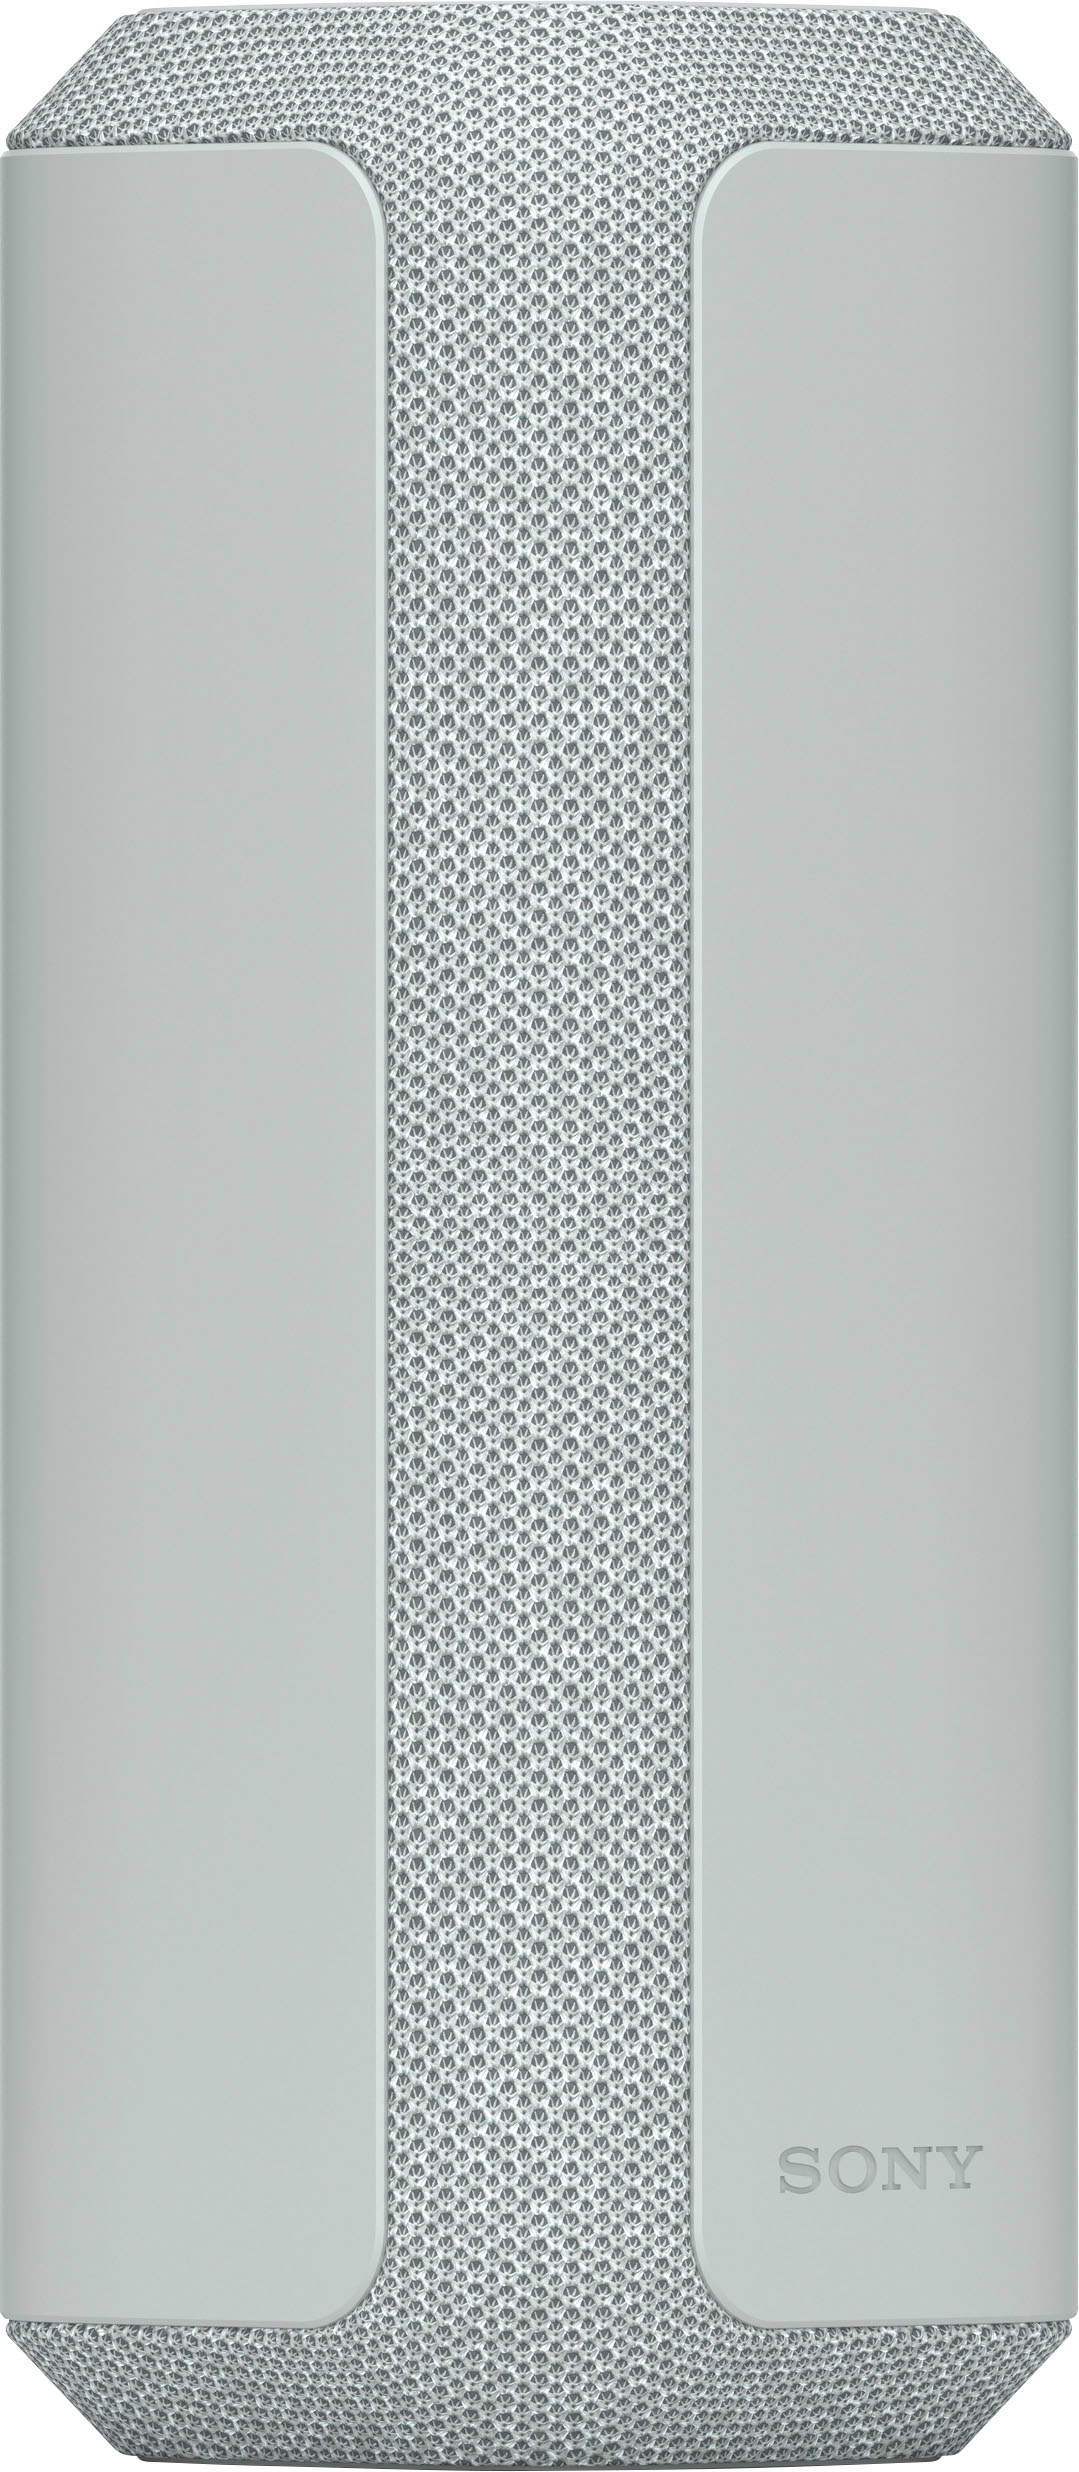 Sony XE300 Portable Waterproof and Dustproof Bluetooth Speaker